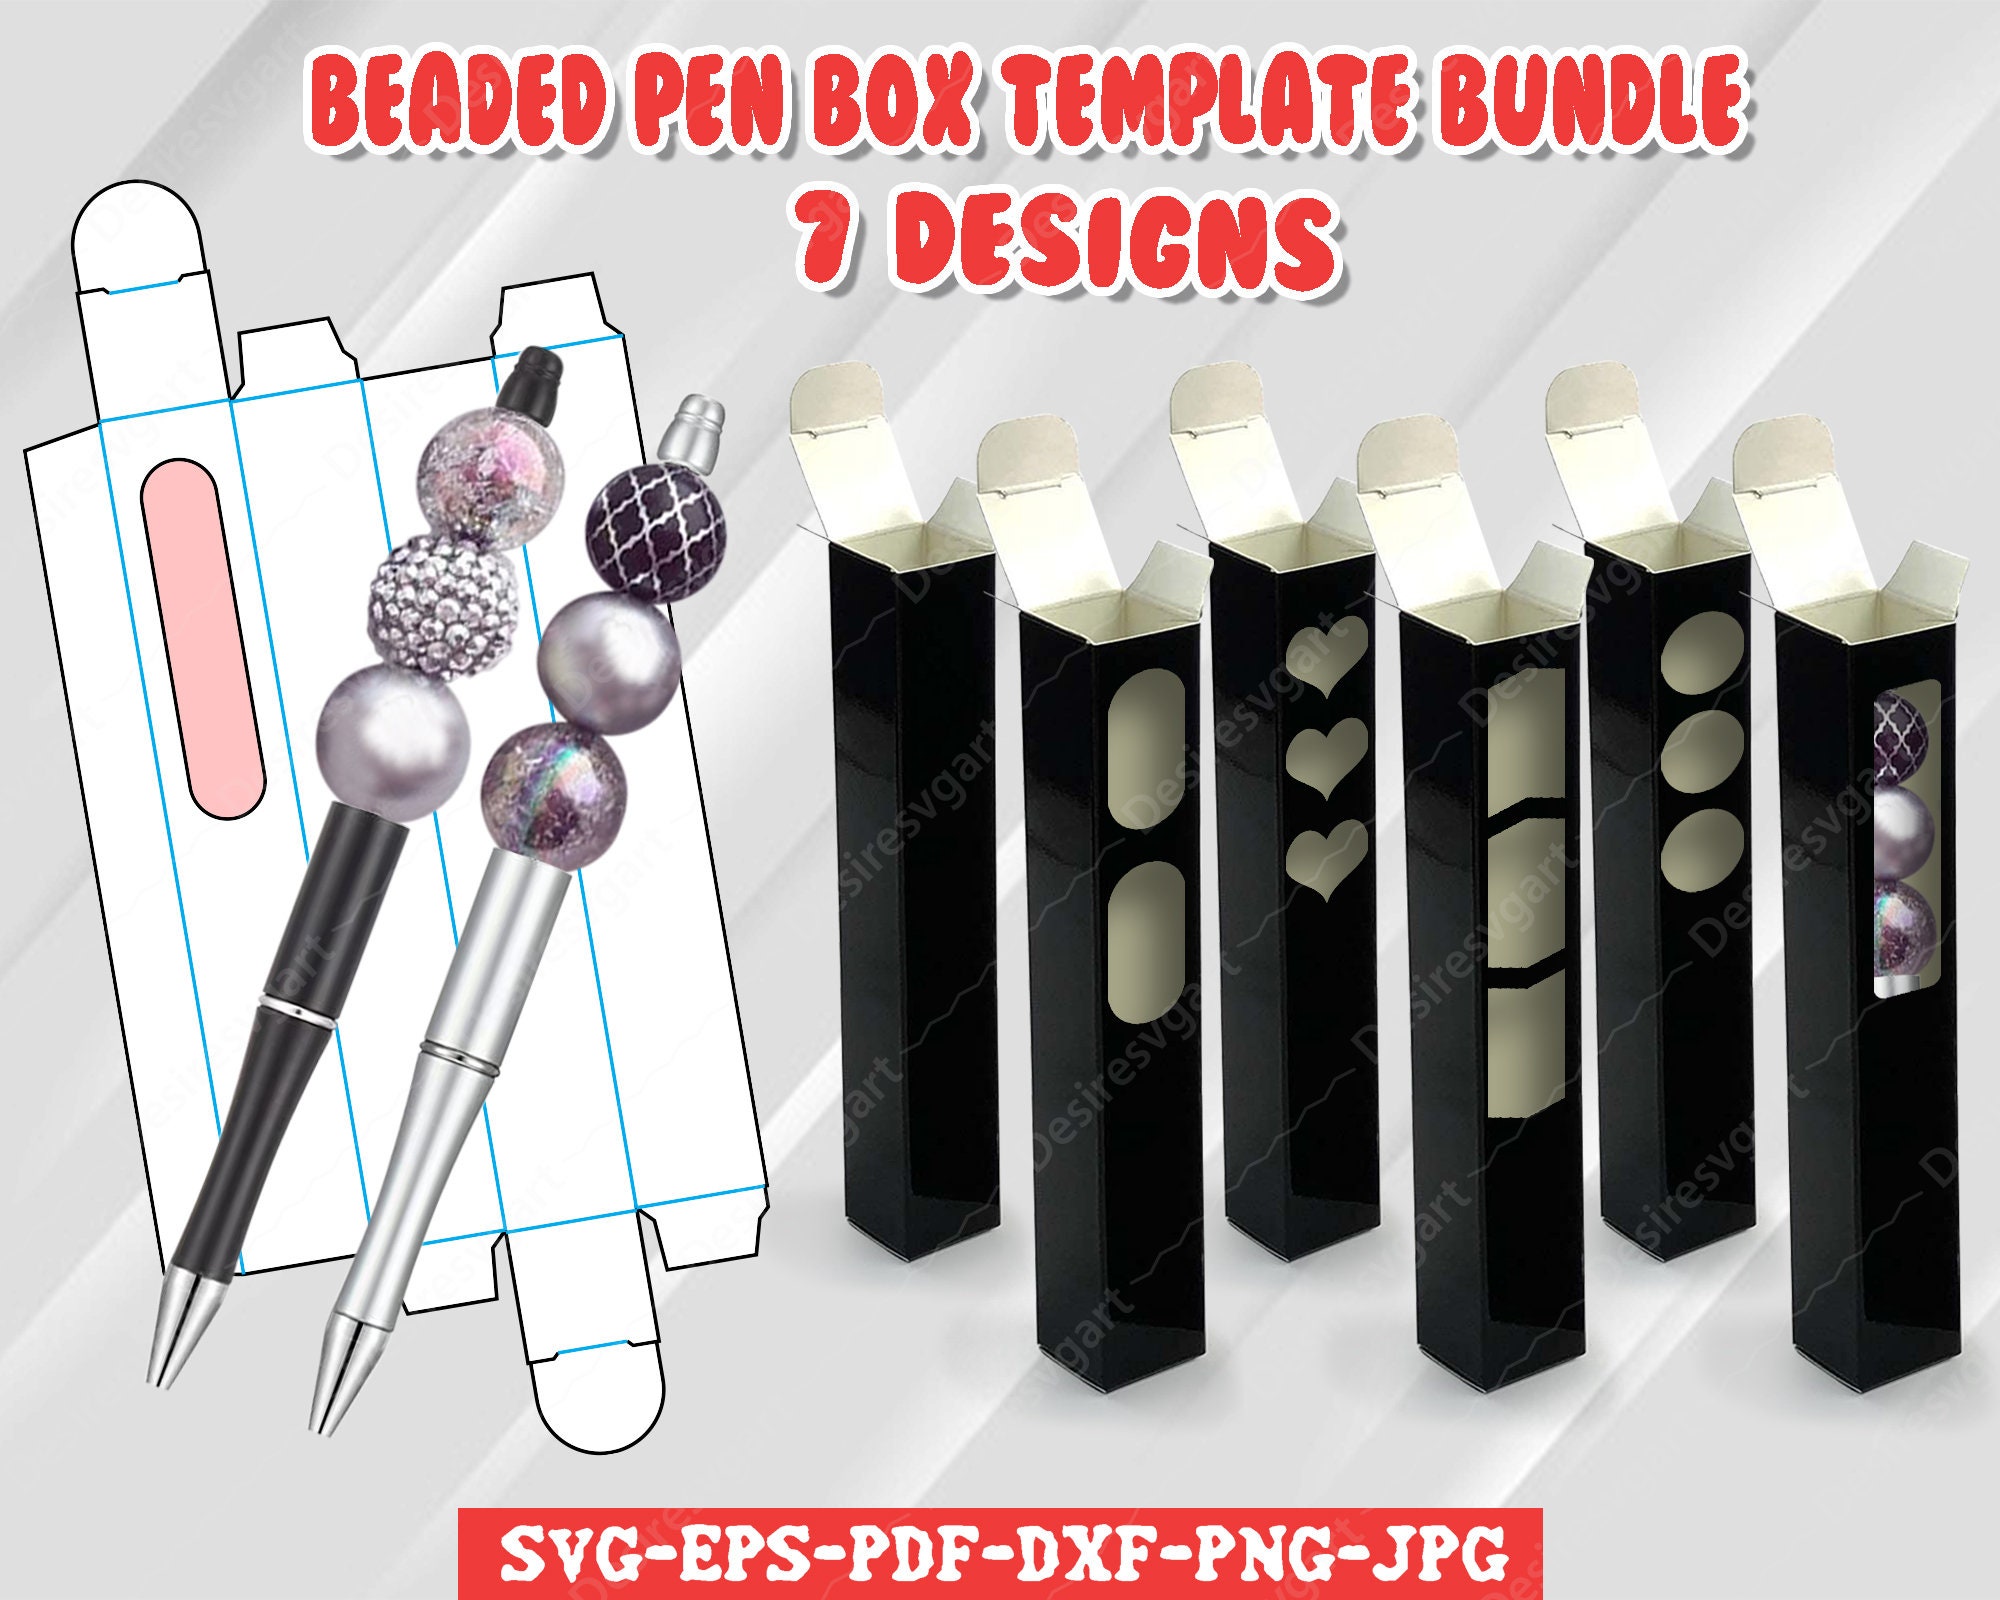 Glitter Pen Box Template, Pen Gift Box Template SVG, DXF, Ms Word